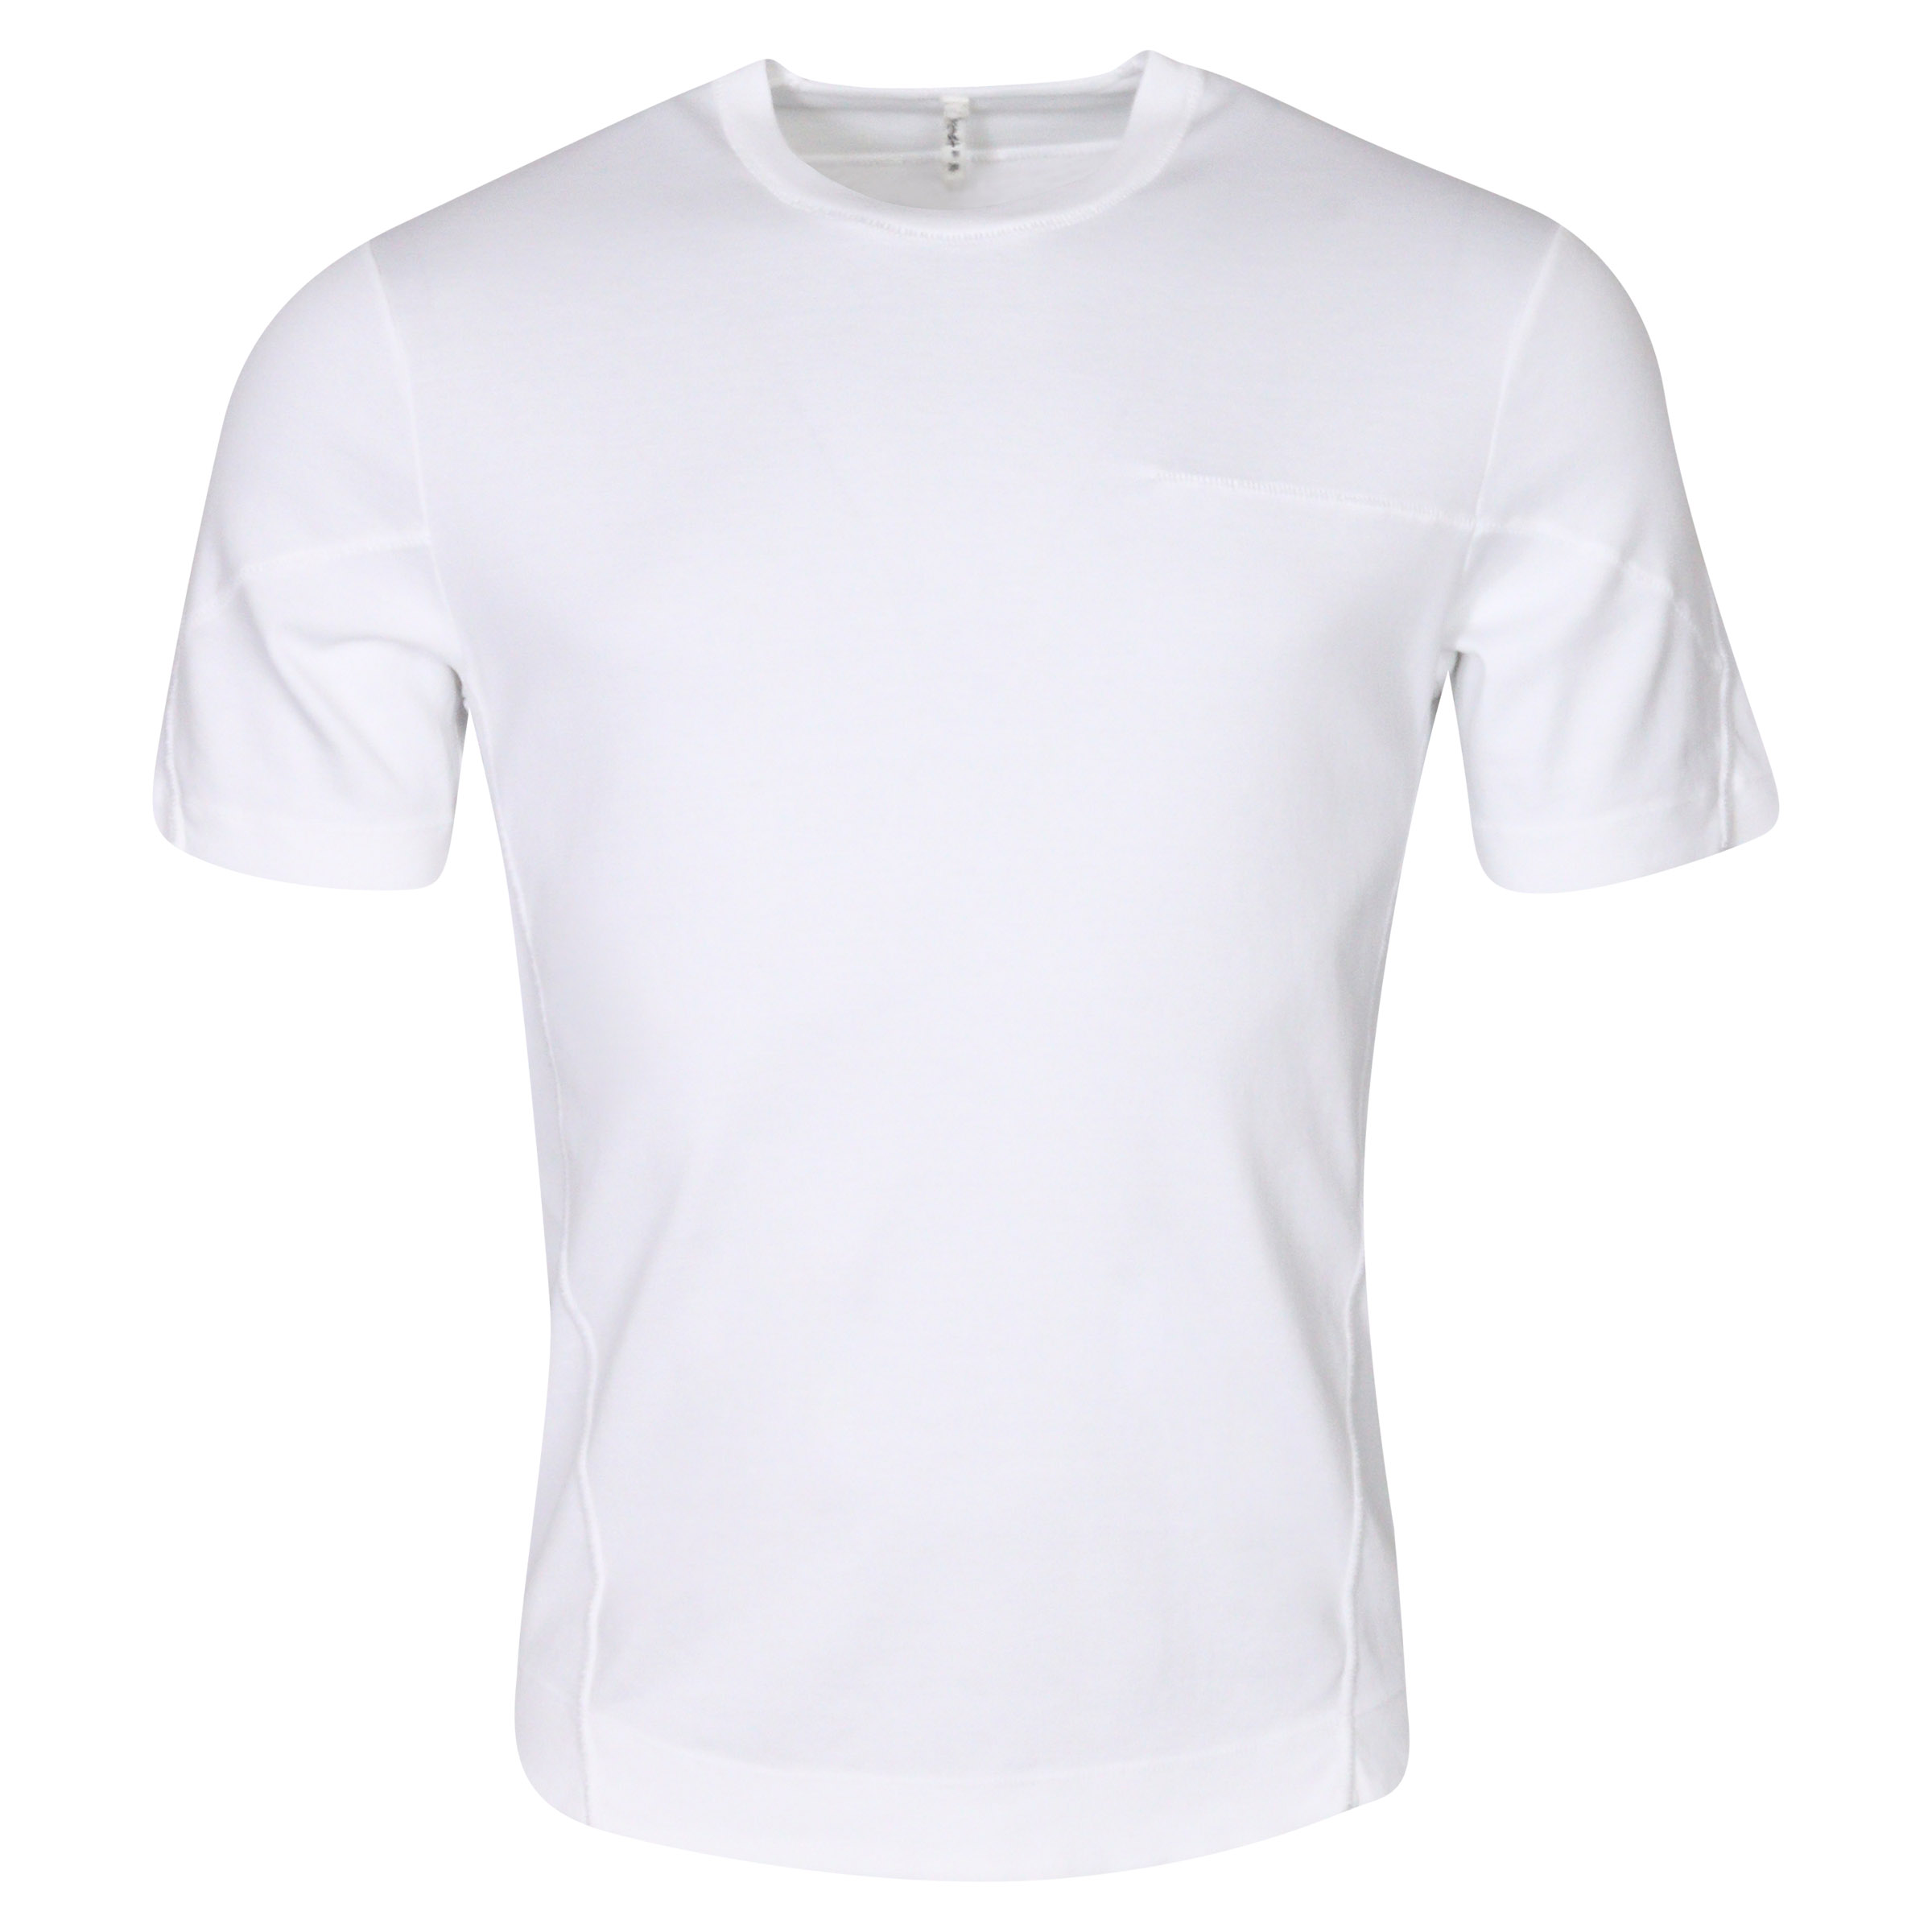 MenTransit Uomo Cotton T-Shirt Offwhite